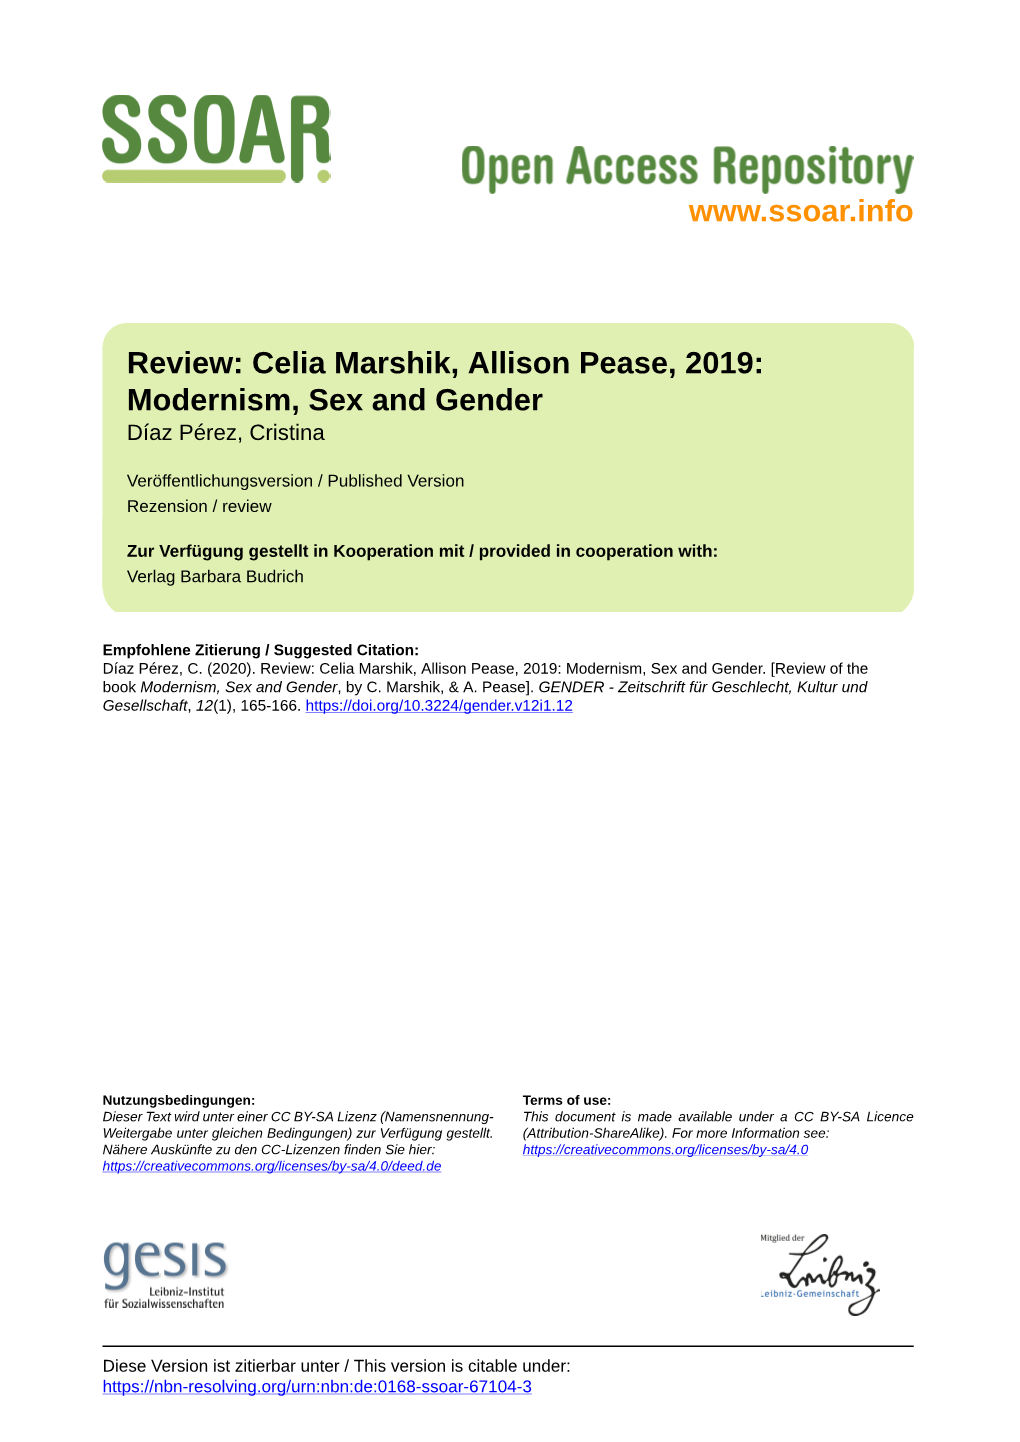 Celia Marshik/Allison Pease, 2019: Modernism, Sex and Gender. London: Bloomsbury